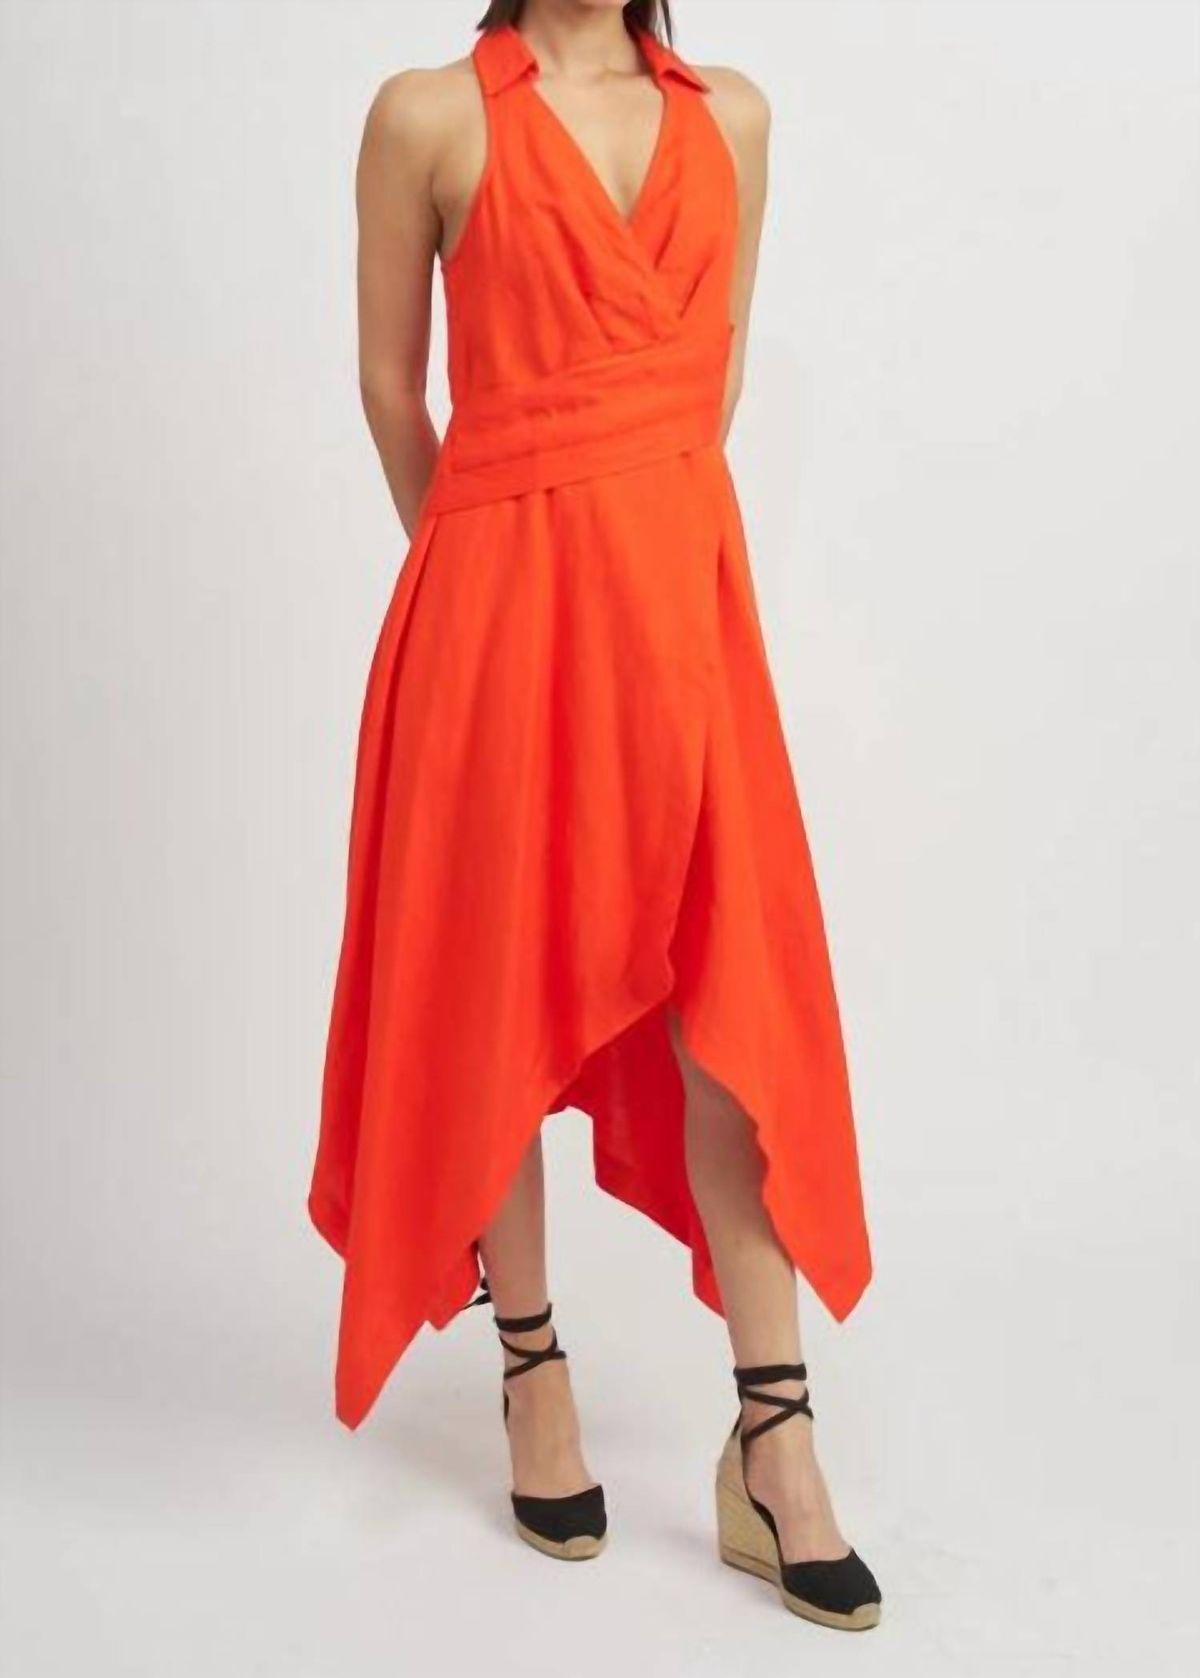 Style 1-1270903777-3236 En Saison Size S High Neck Orange Cocktail Dress on Queenly